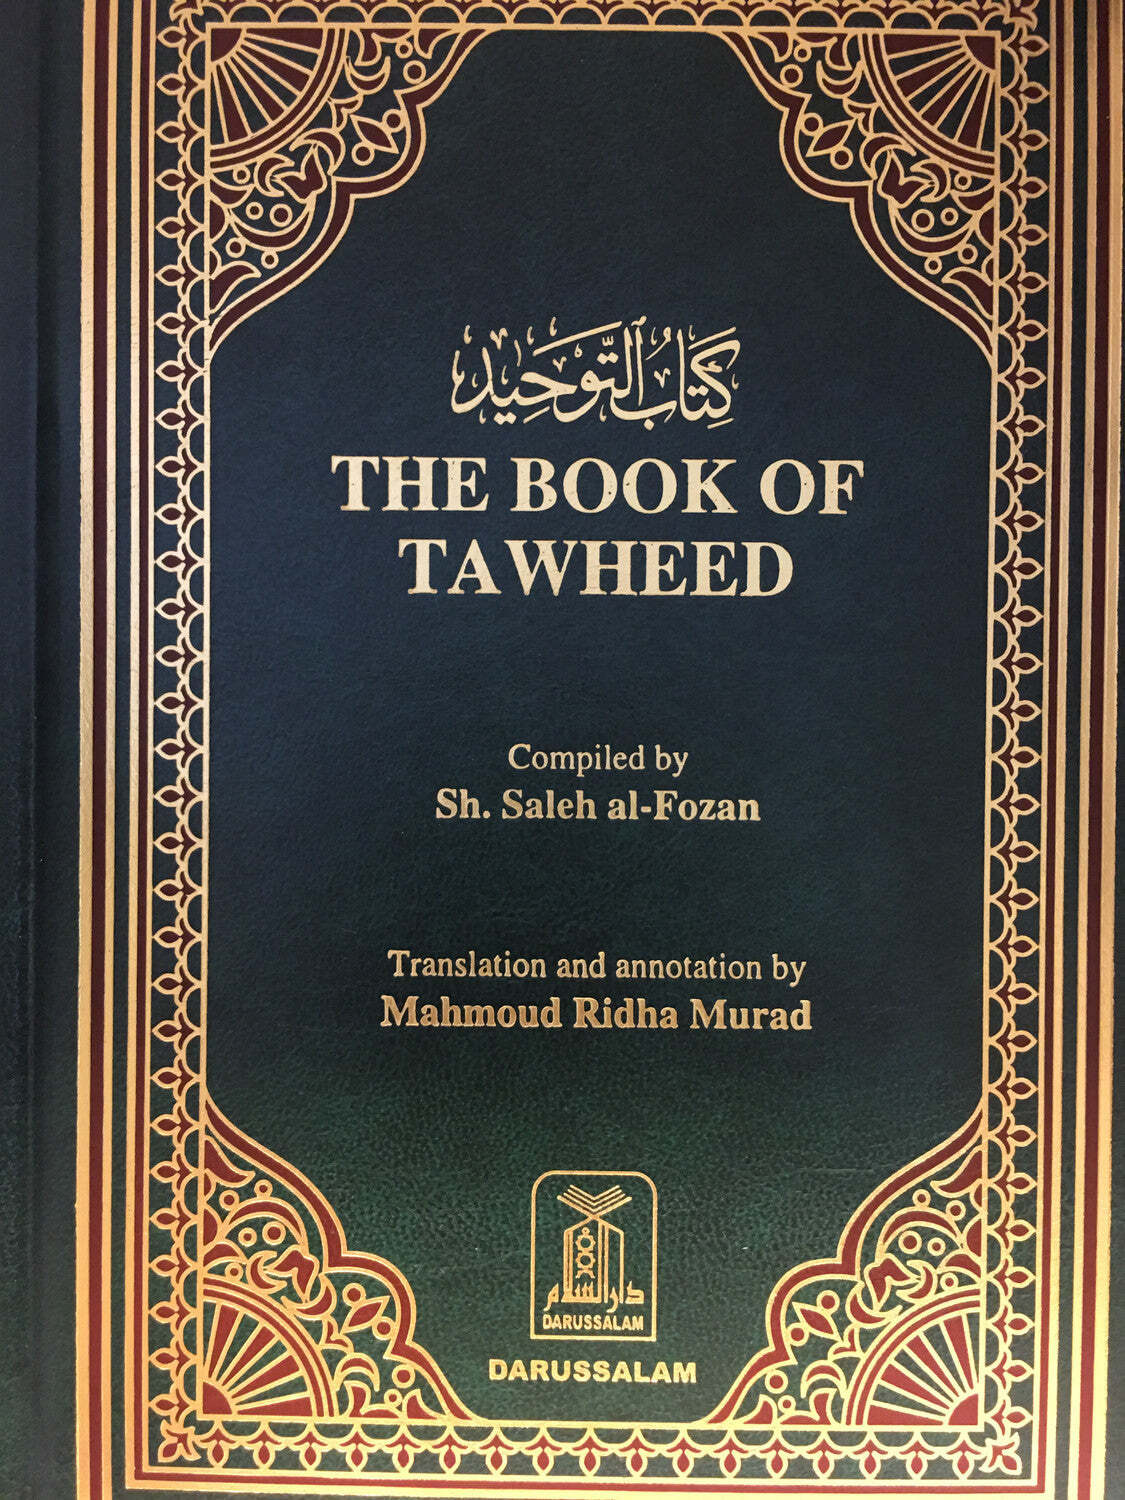 The book of tawheed